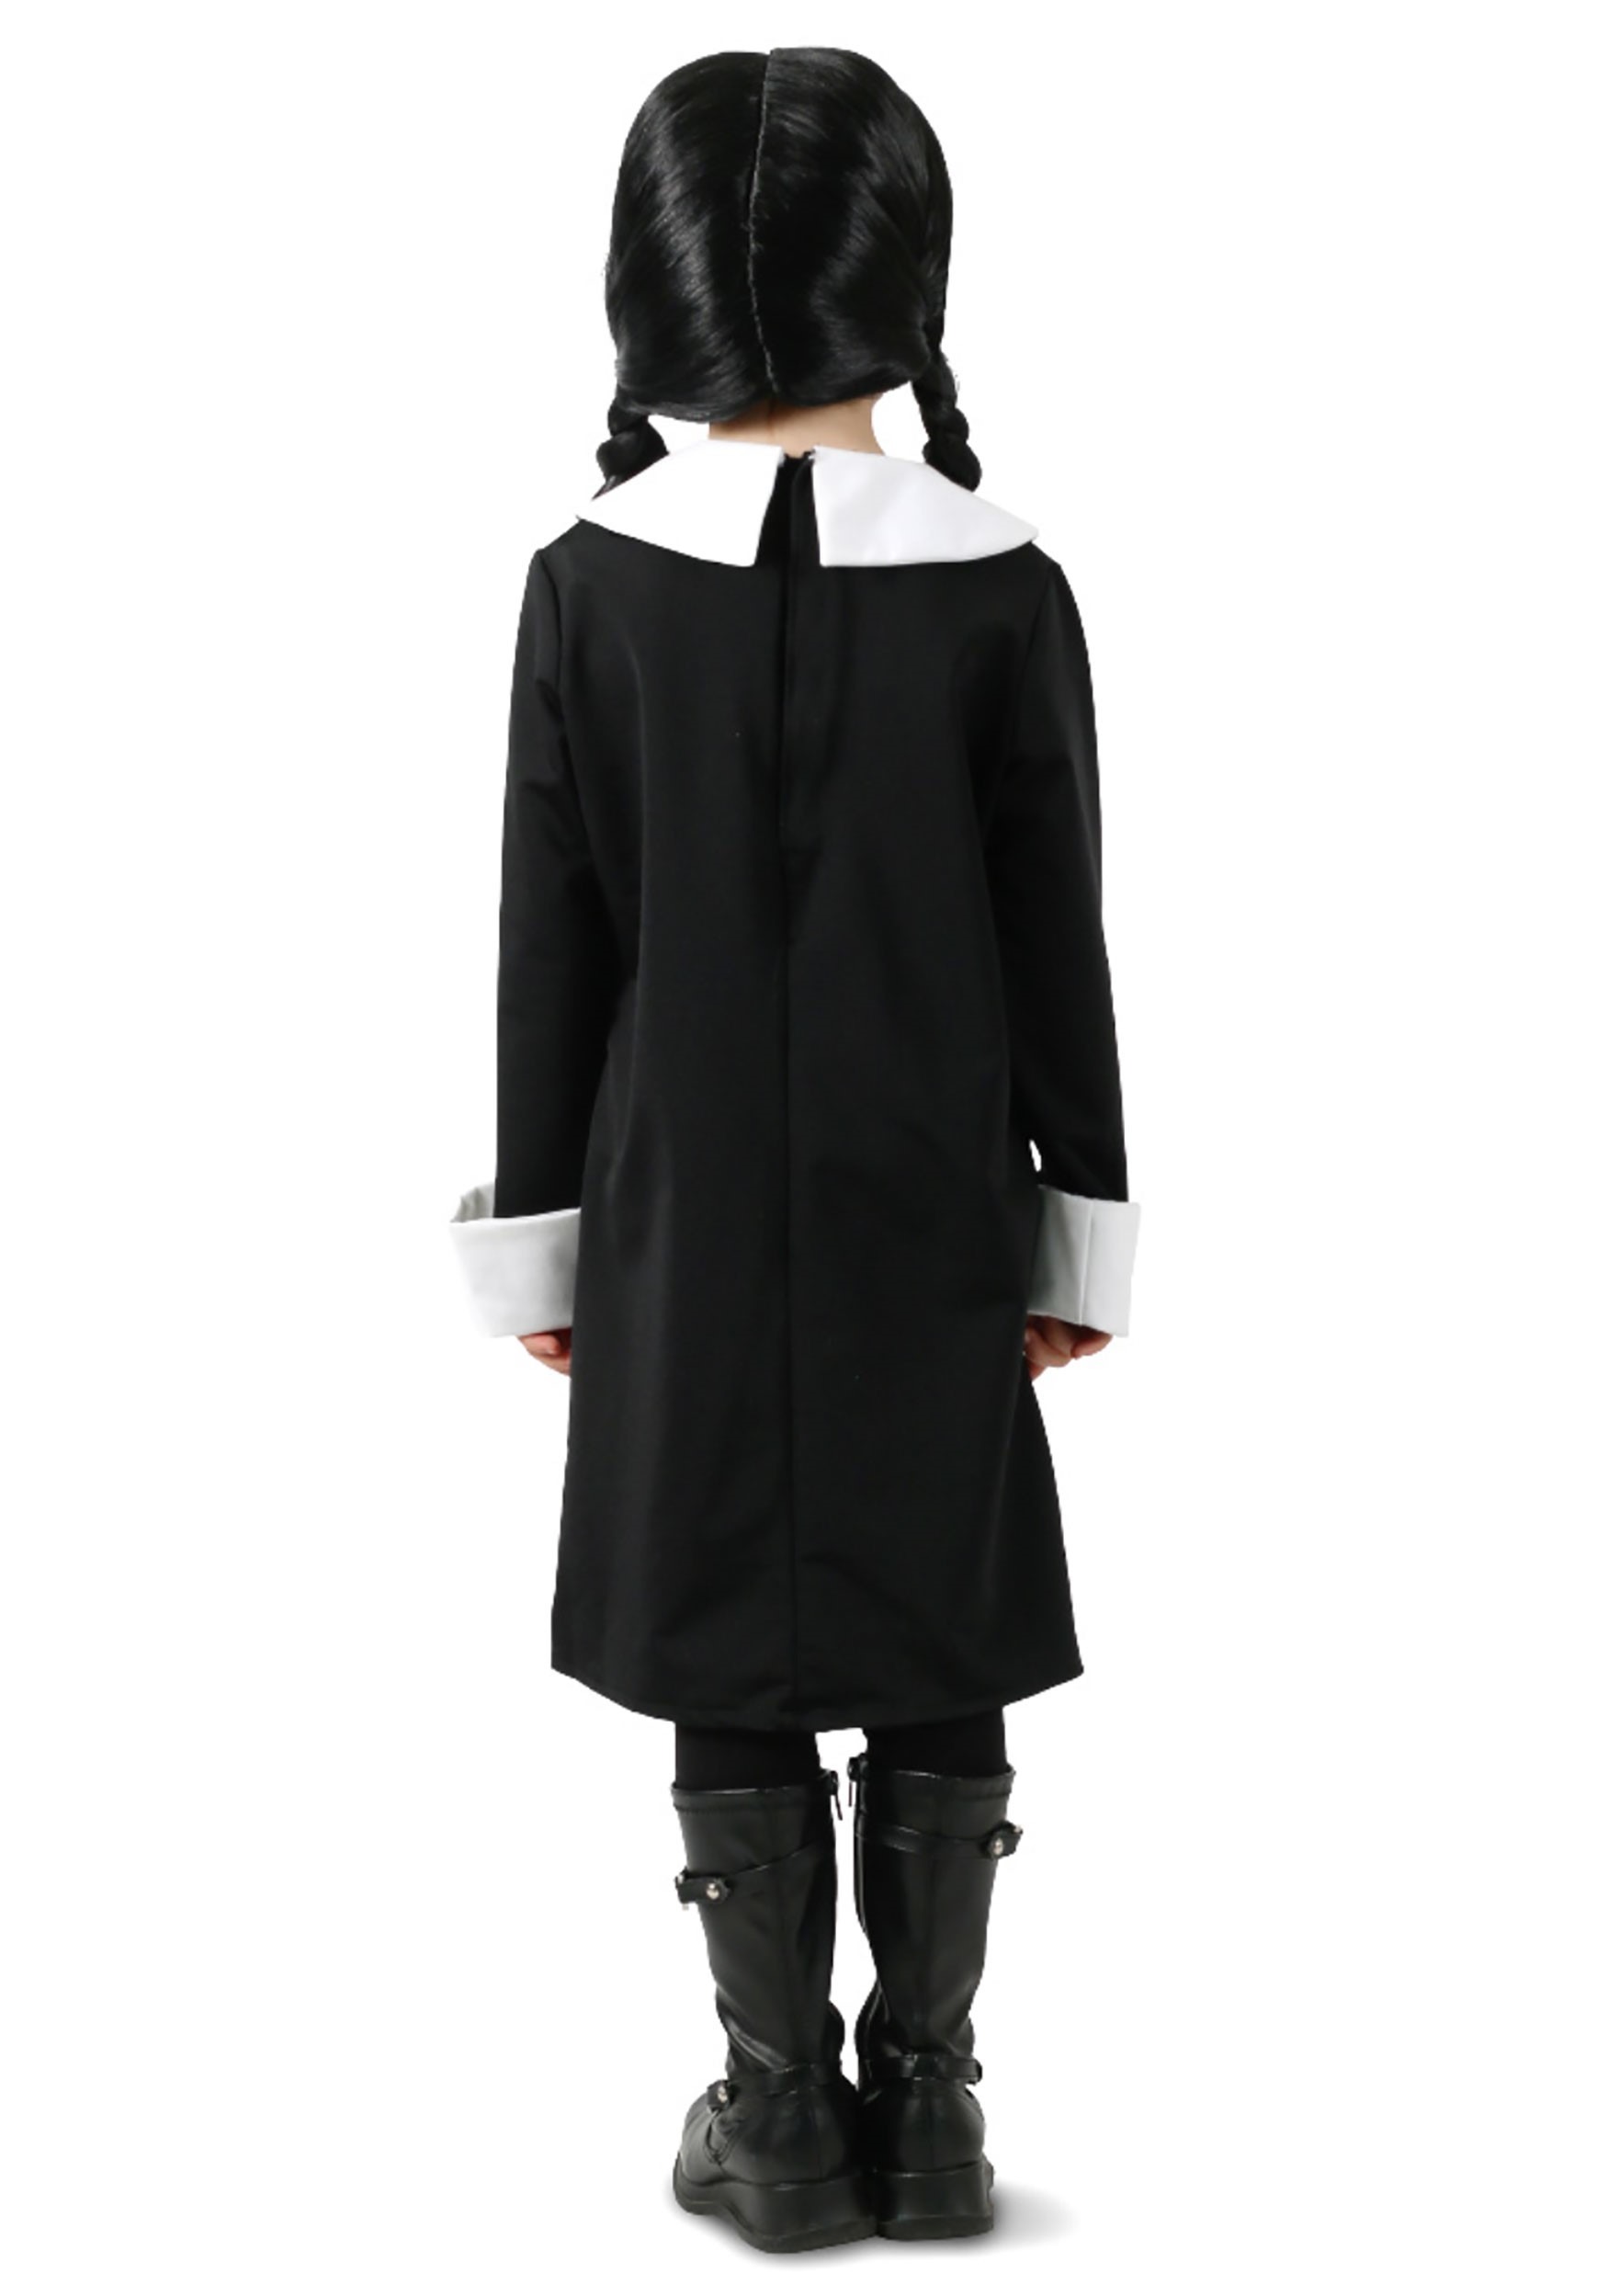  Addams Family Child's Wednesday Addams Costume, Medium